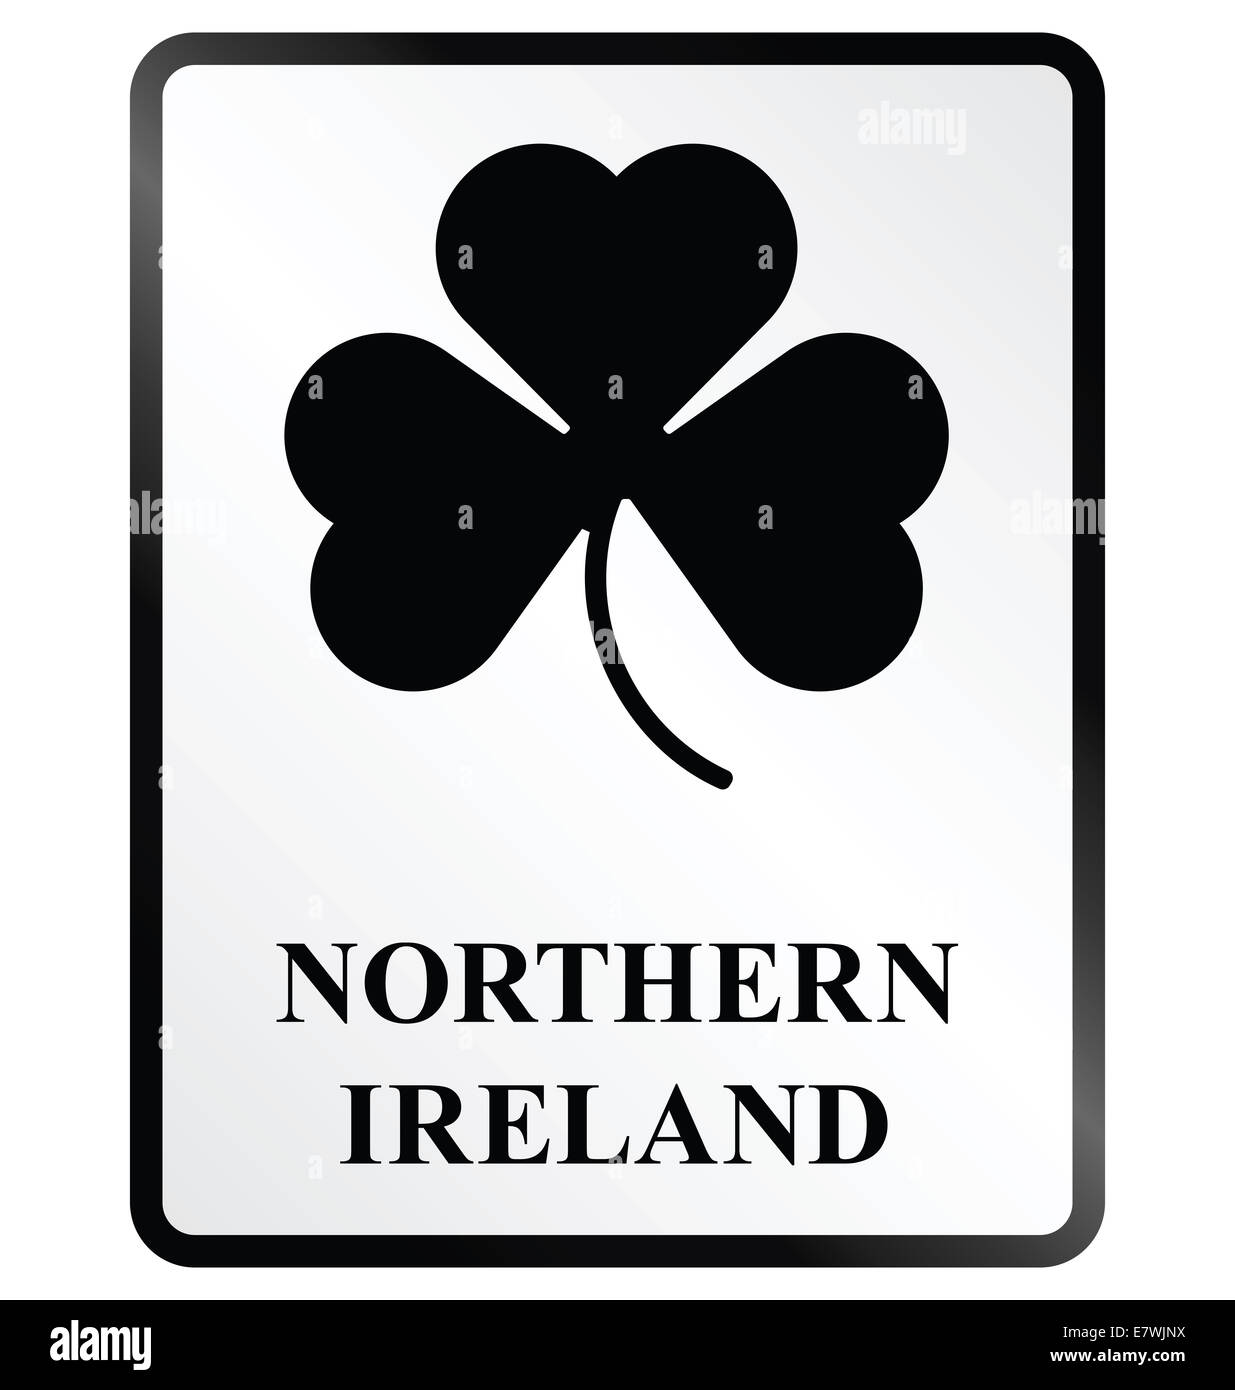 Monochrome Northern Ireland public information sign Stock Photo